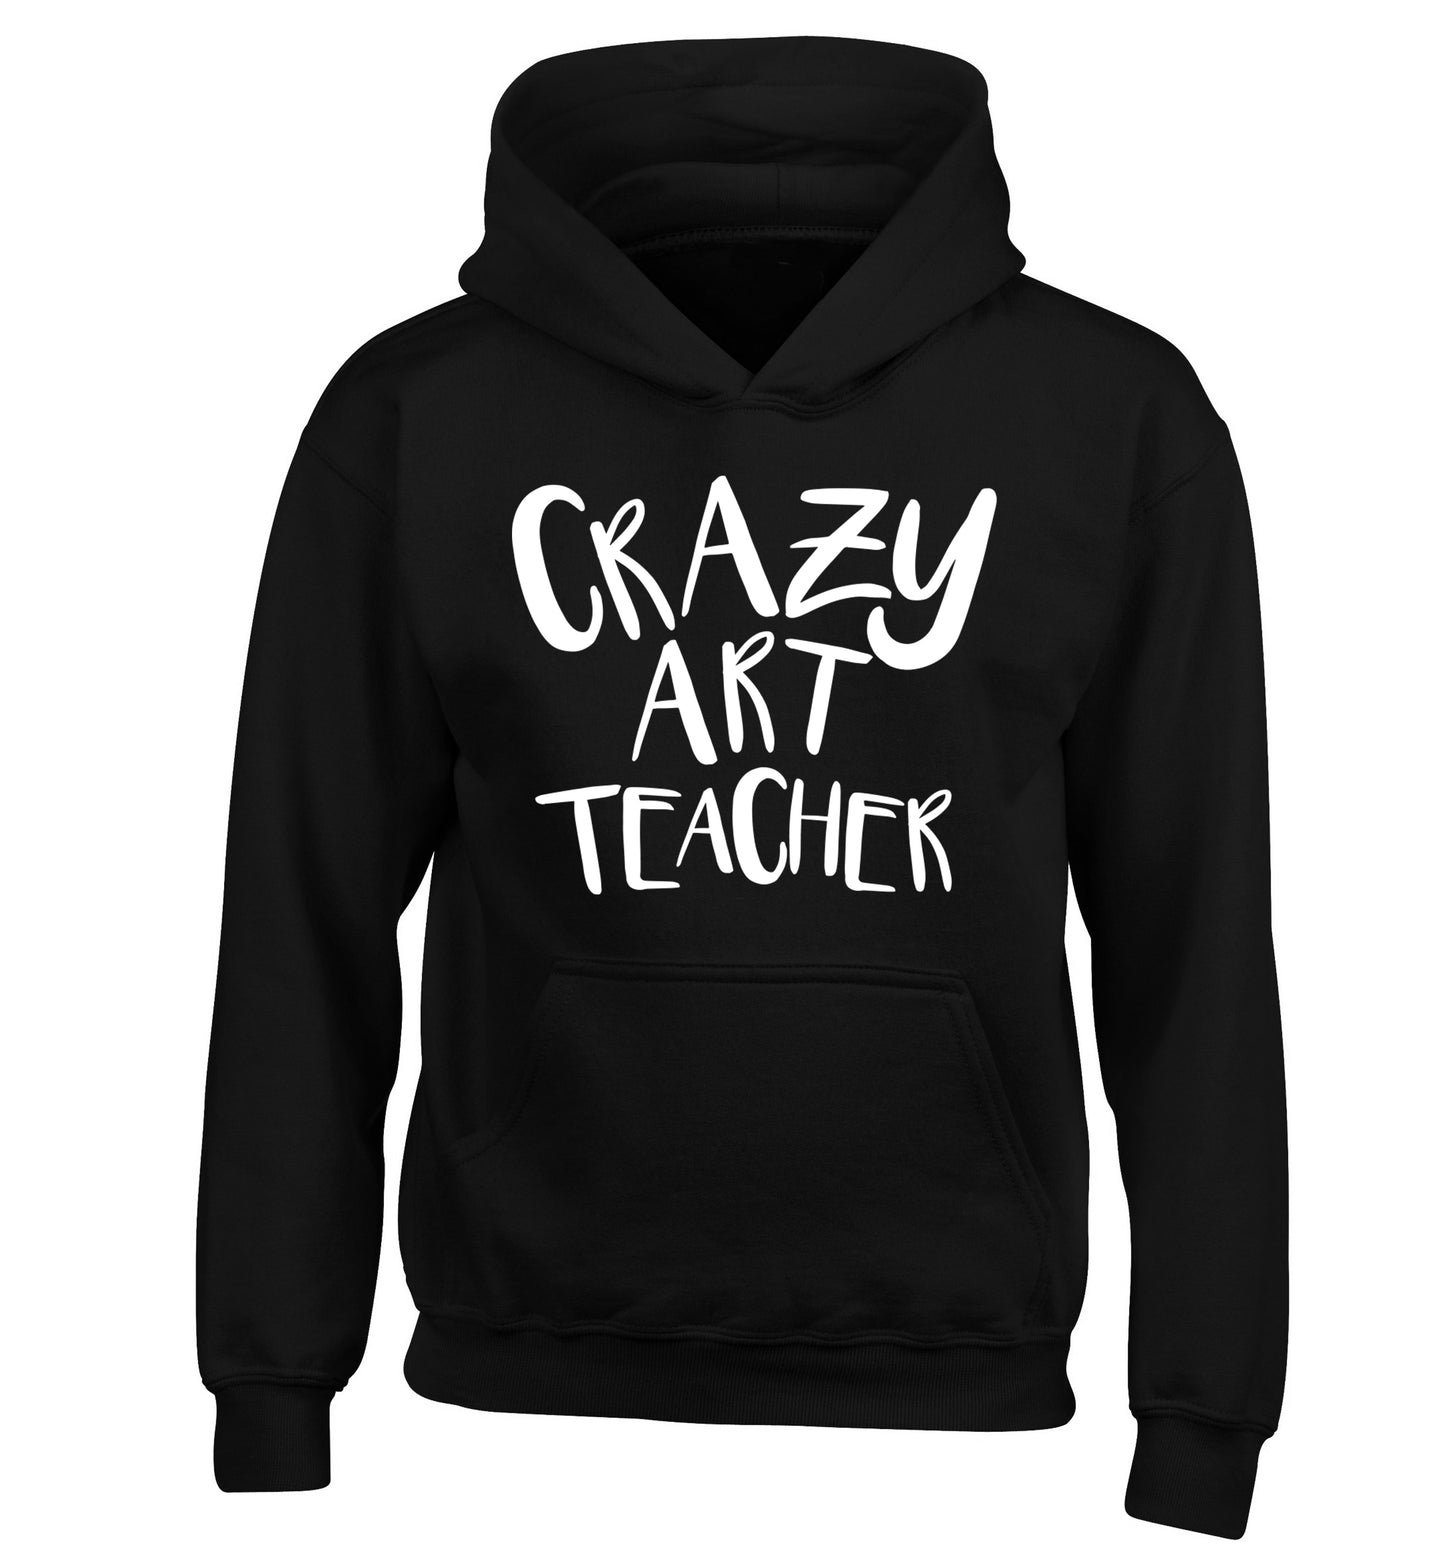 Crazy art teacher children's black hoodie 12-13 Years